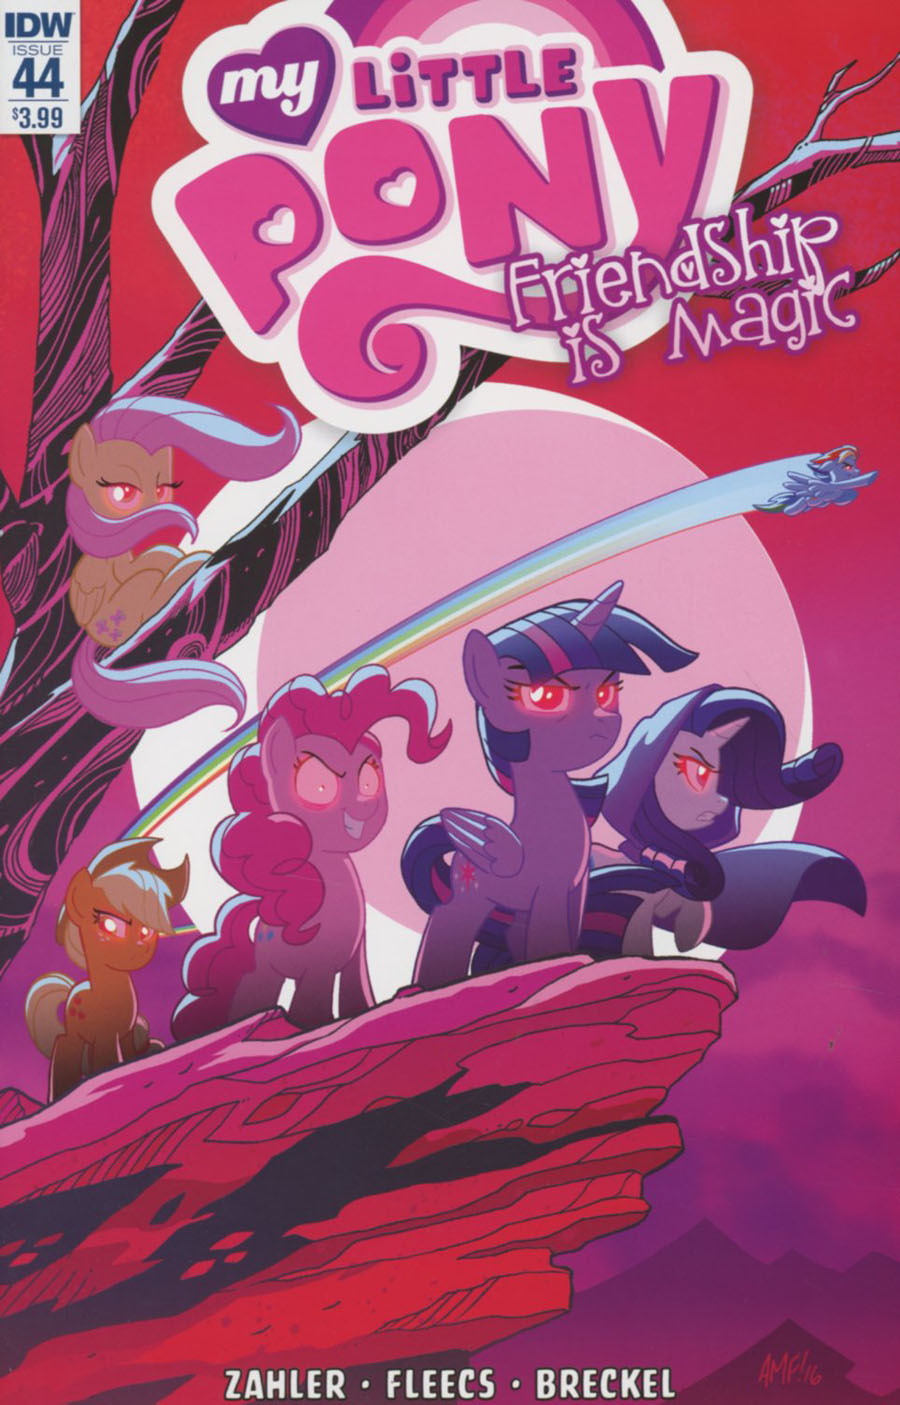 My Little Pony Friendship Is Magic #44 Cover A Regular Tony Fleecs Cover